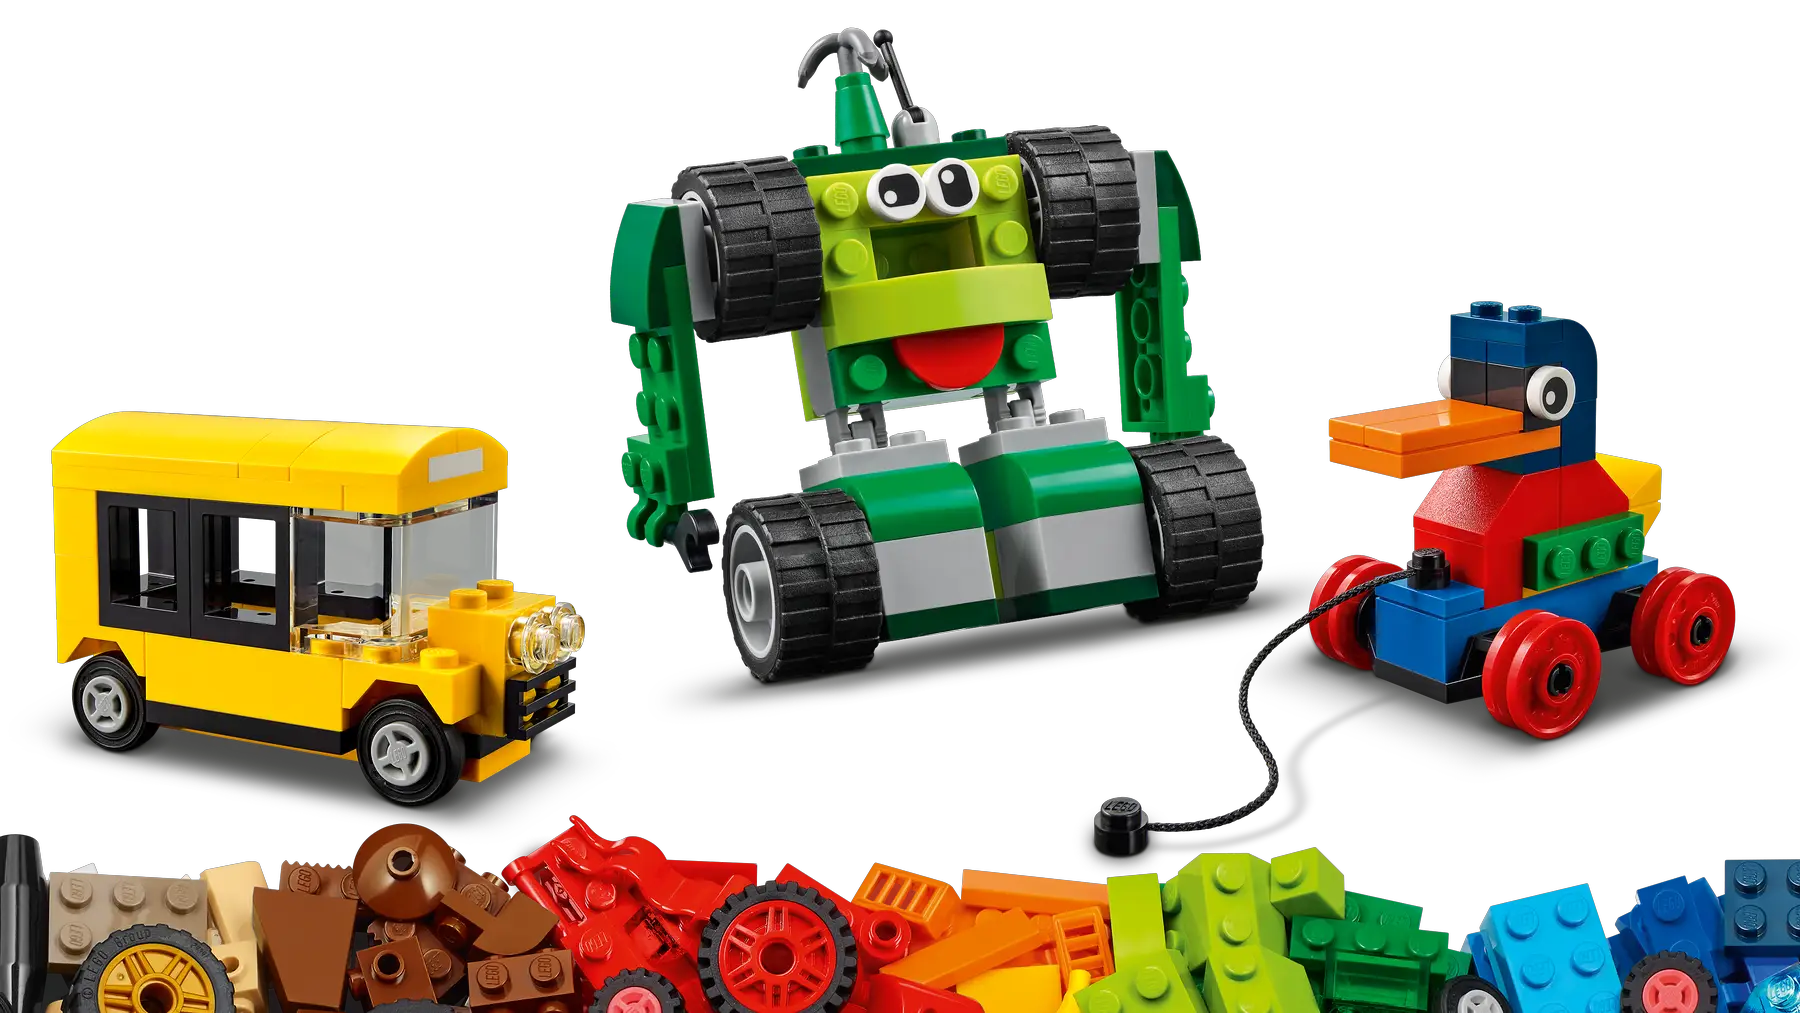 Lego Classic Bricks and Wheels